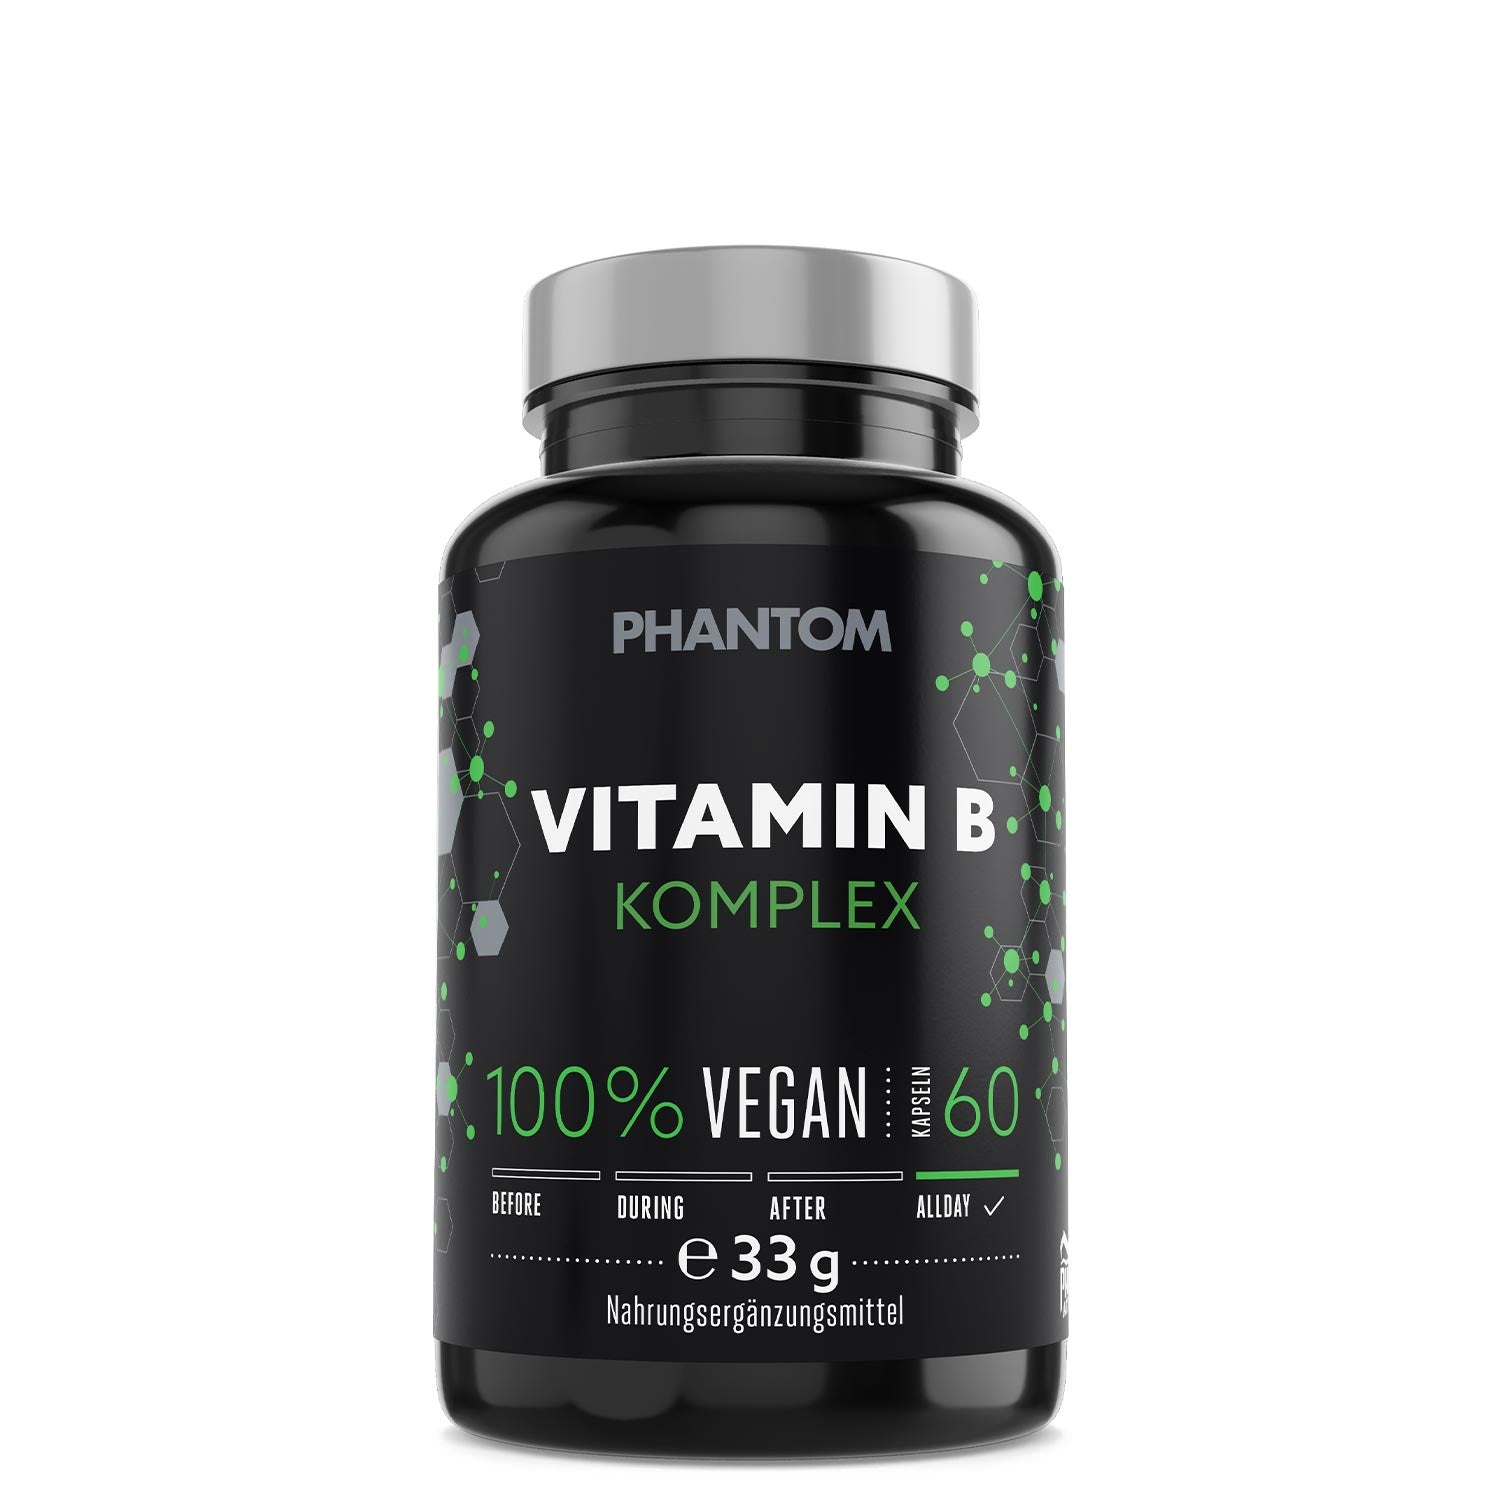 Phantom Vitamin B-Komplex für ein stärkeres Imunsystem im Kampfsport.